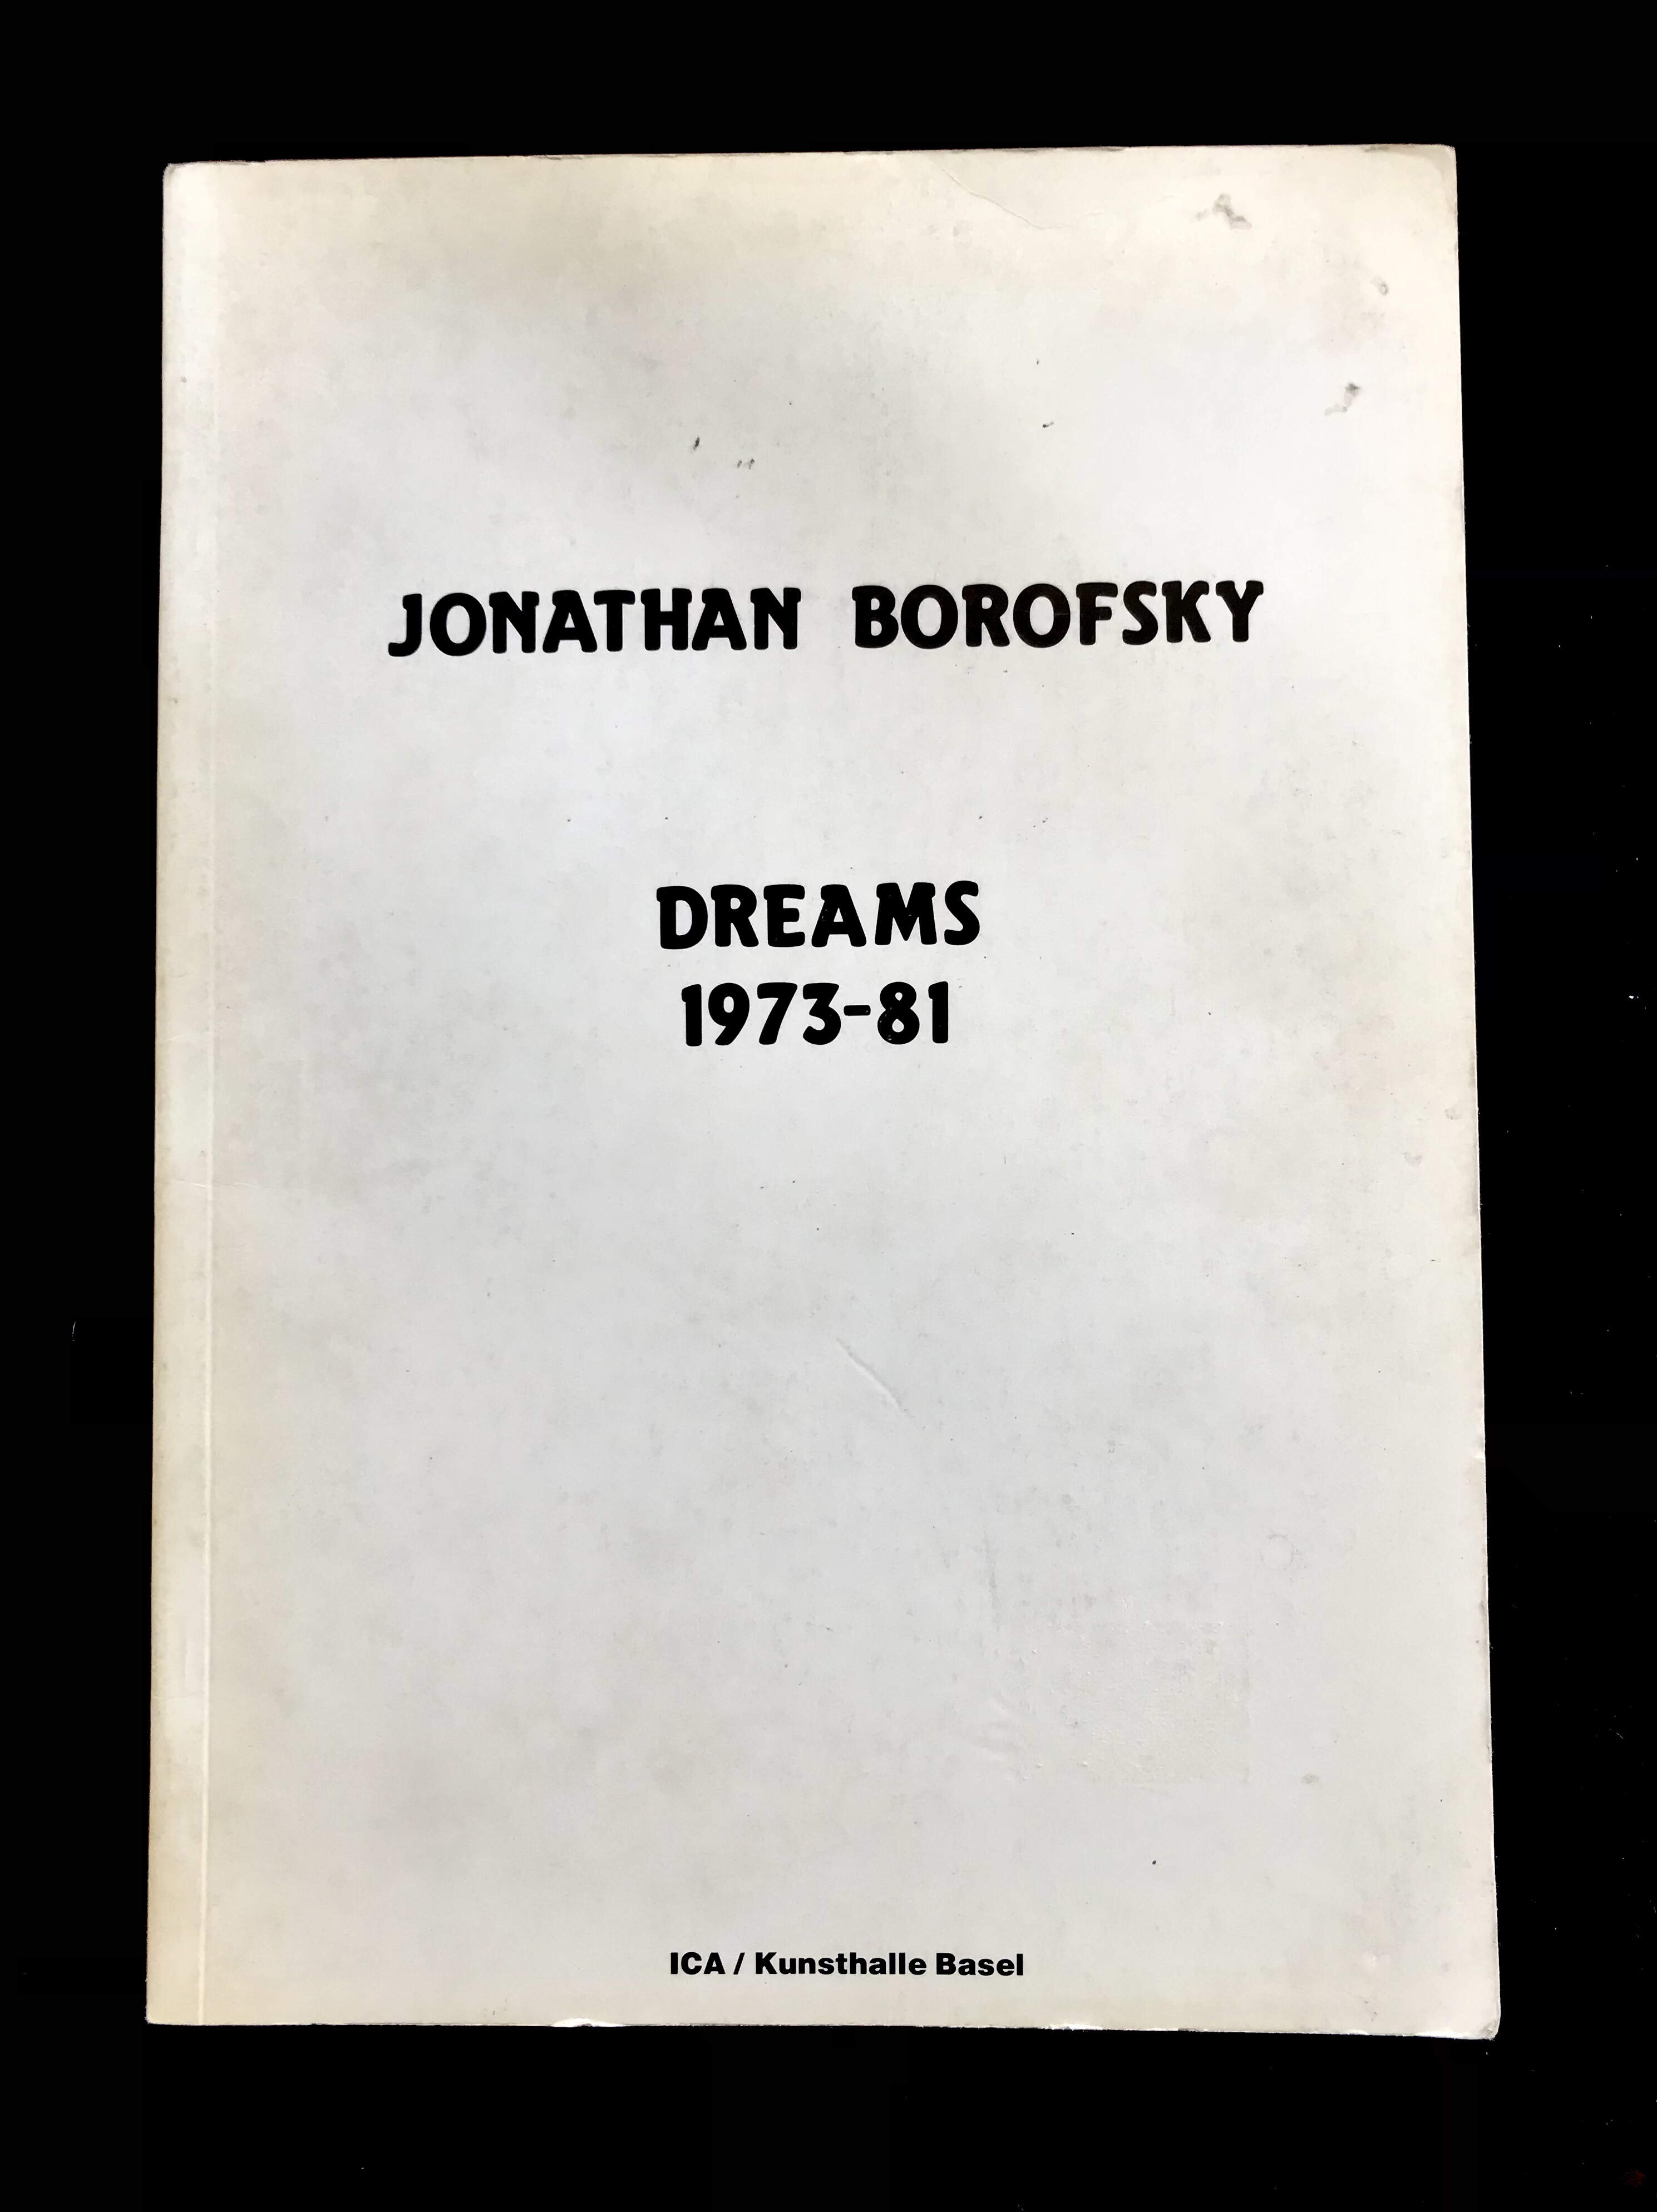 Dreams 1973-81 by Jonathan Borofsky